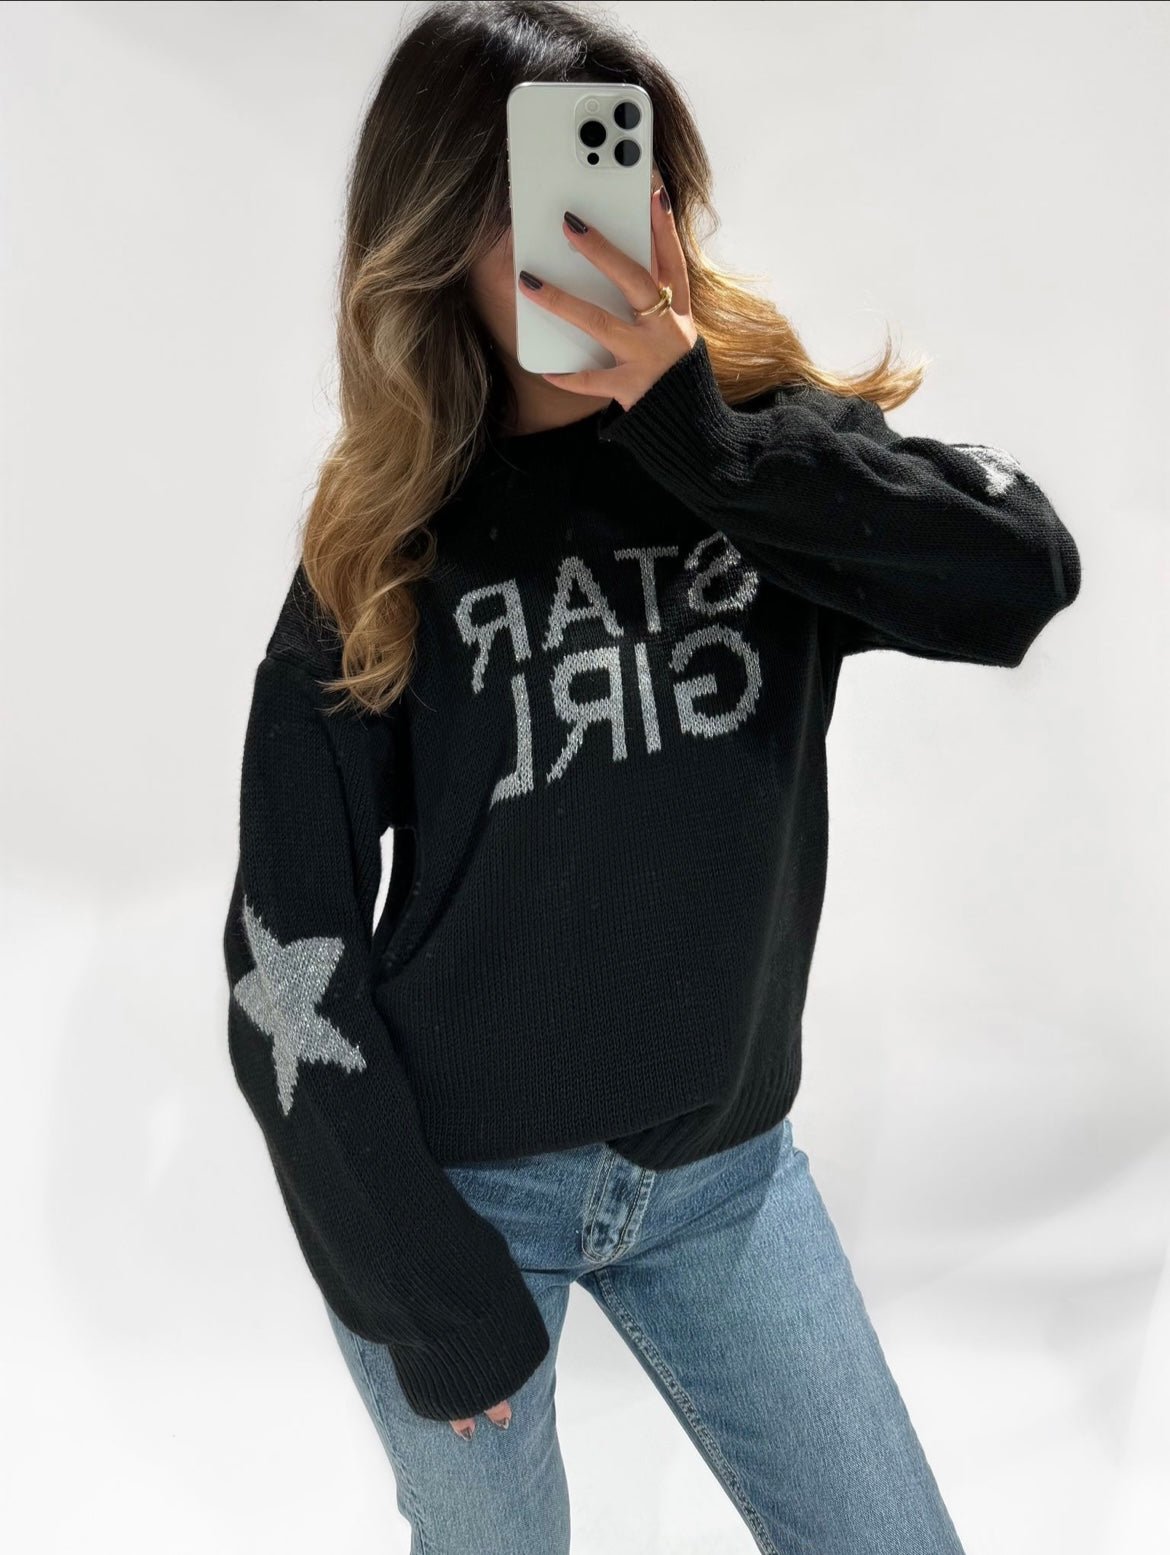 stargirl sweater black - My Favourites